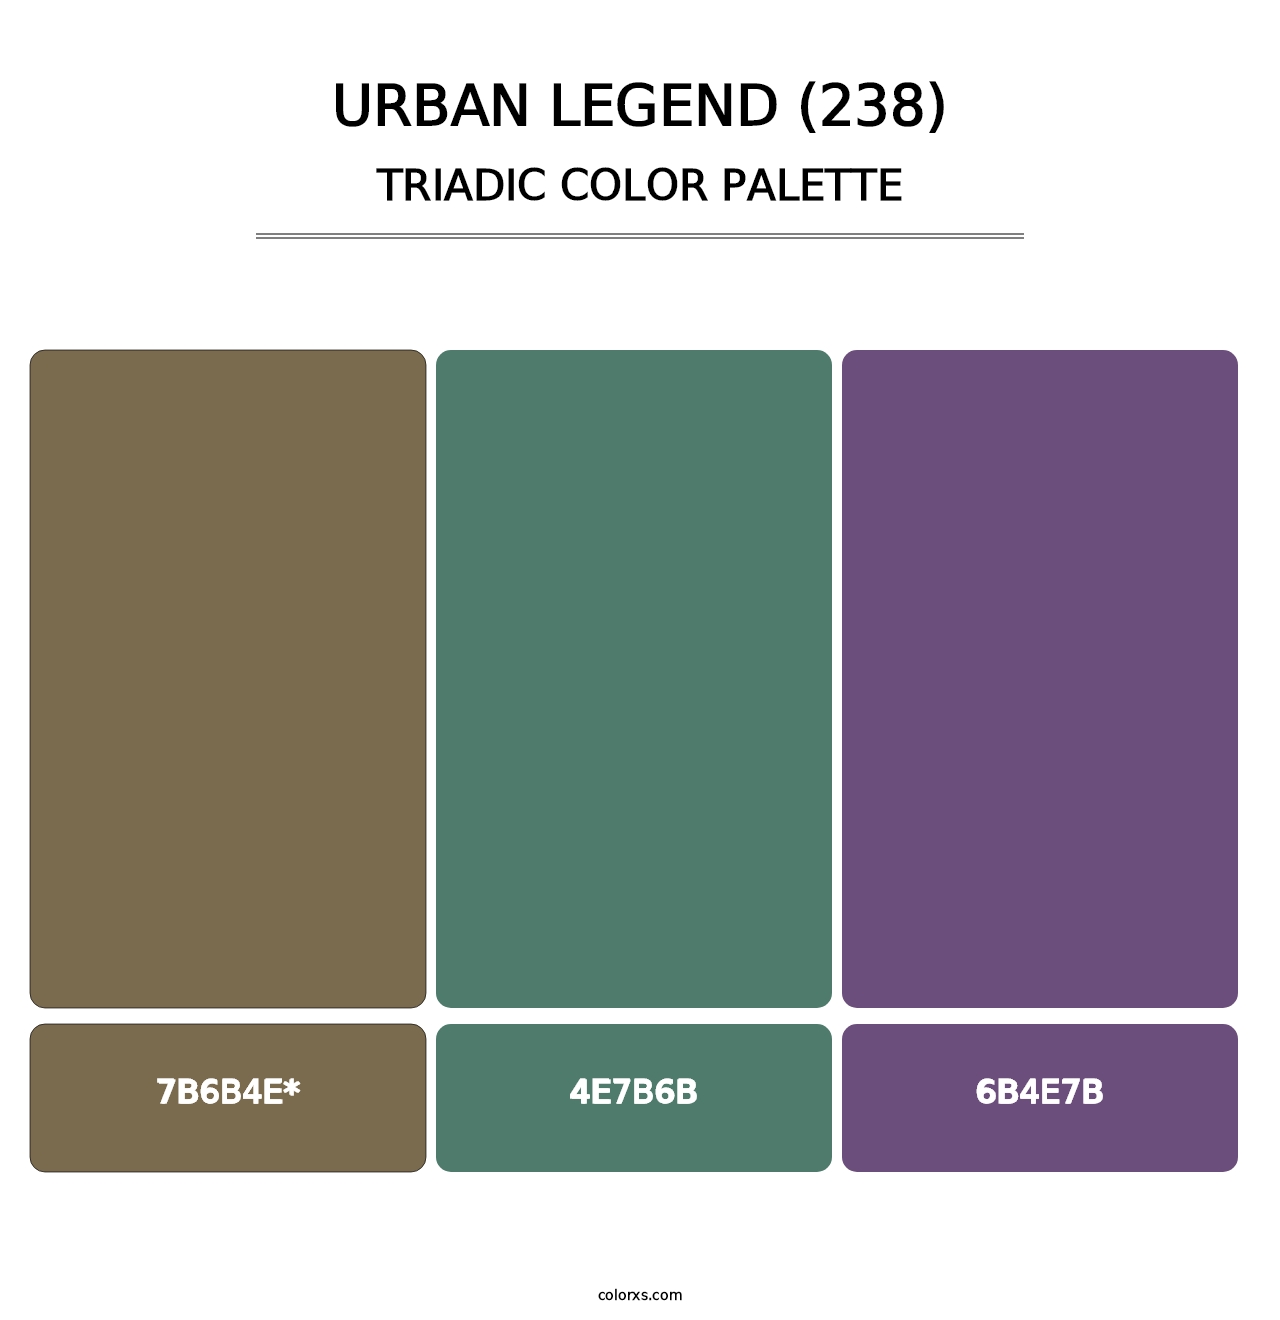 Urban Legend (238) - Triadic Color Palette